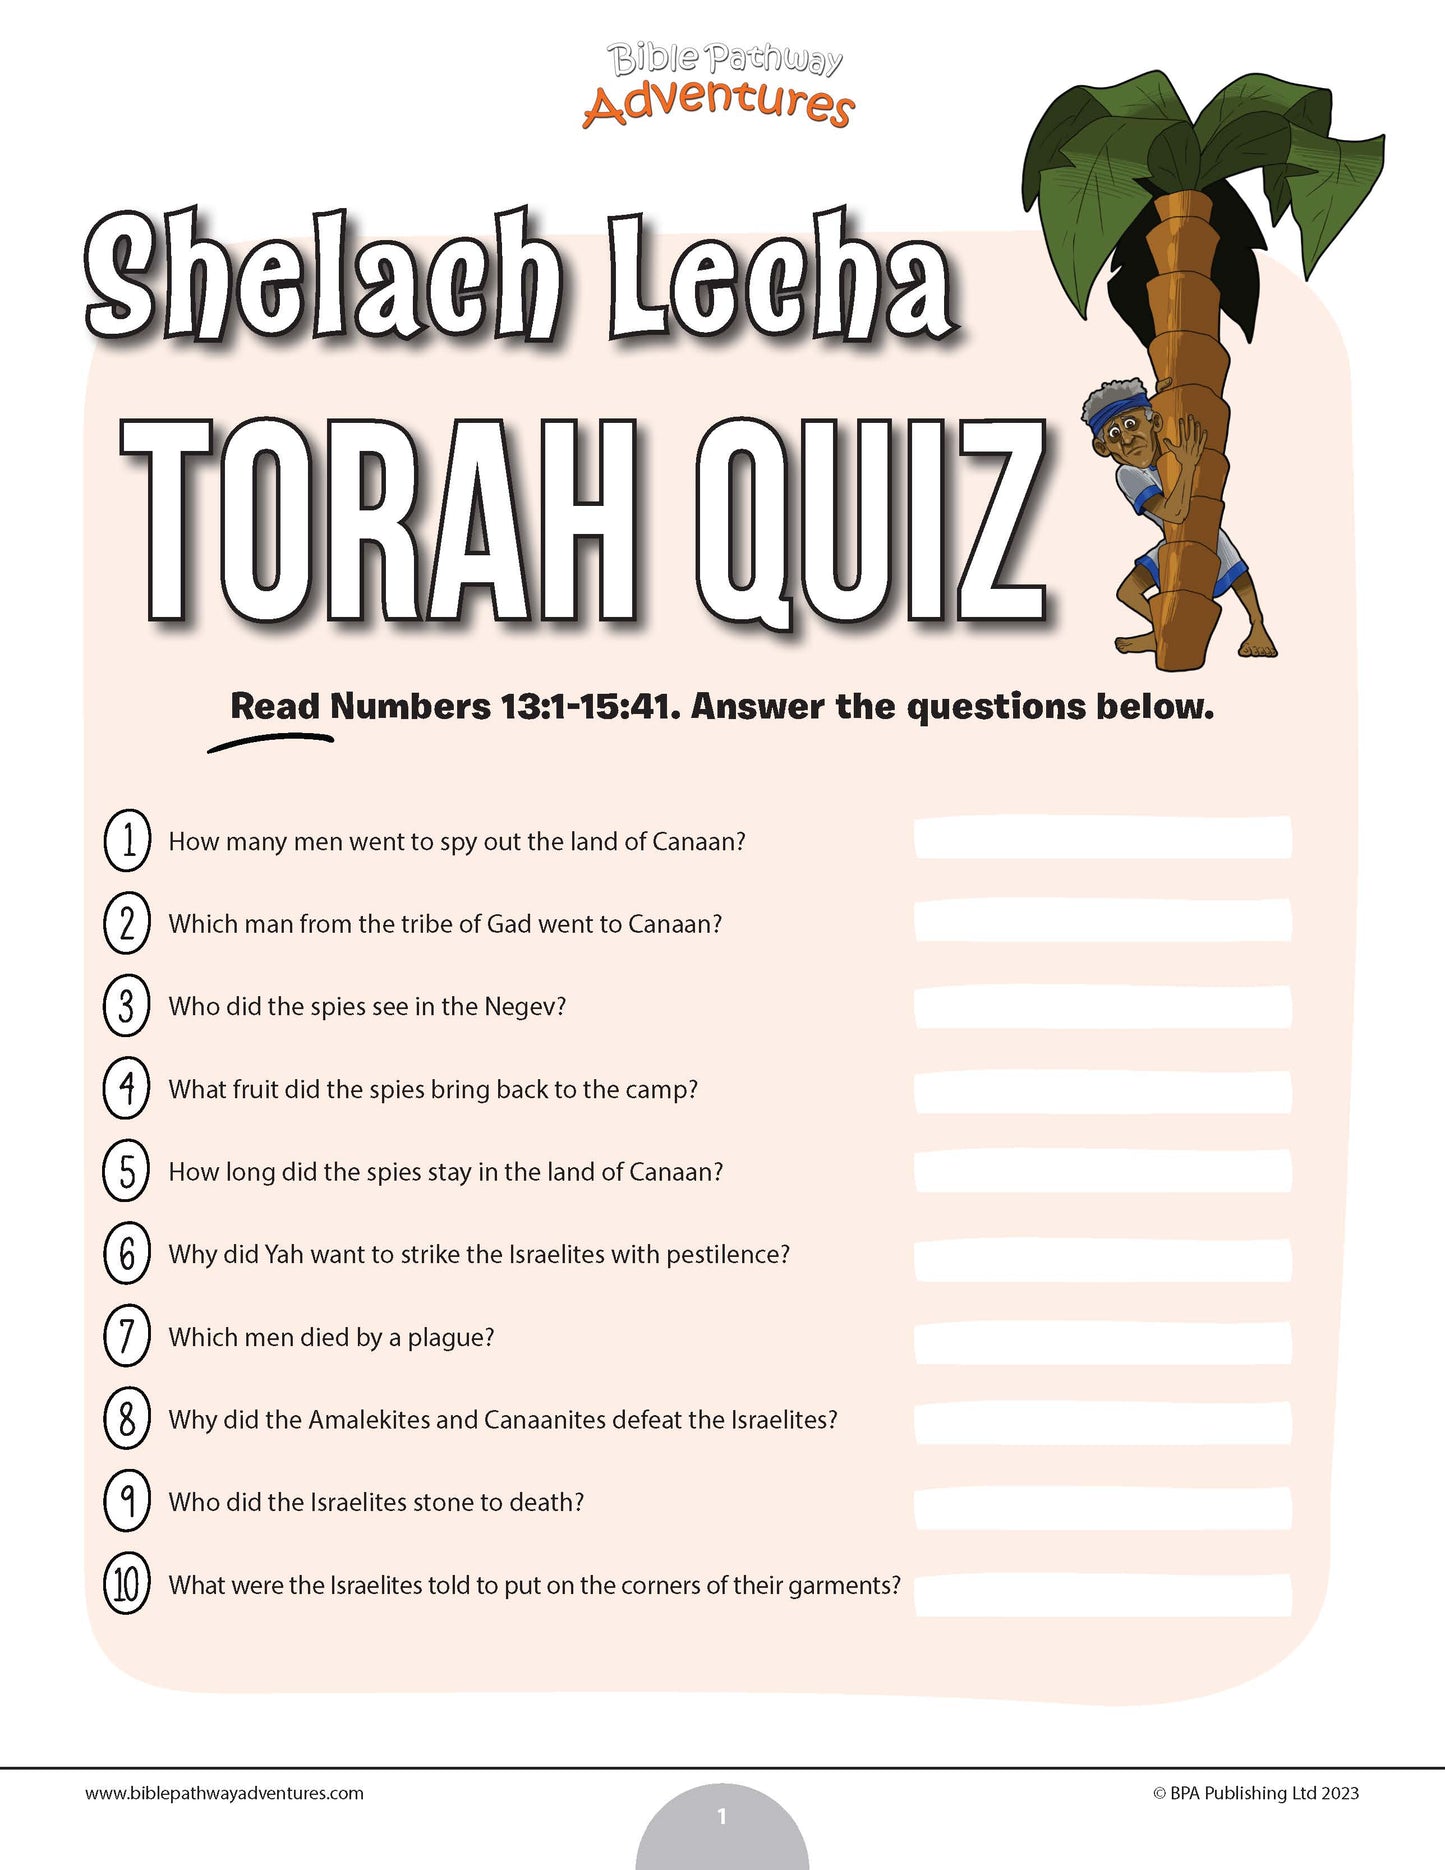 Shelach Lecha Torah quiz